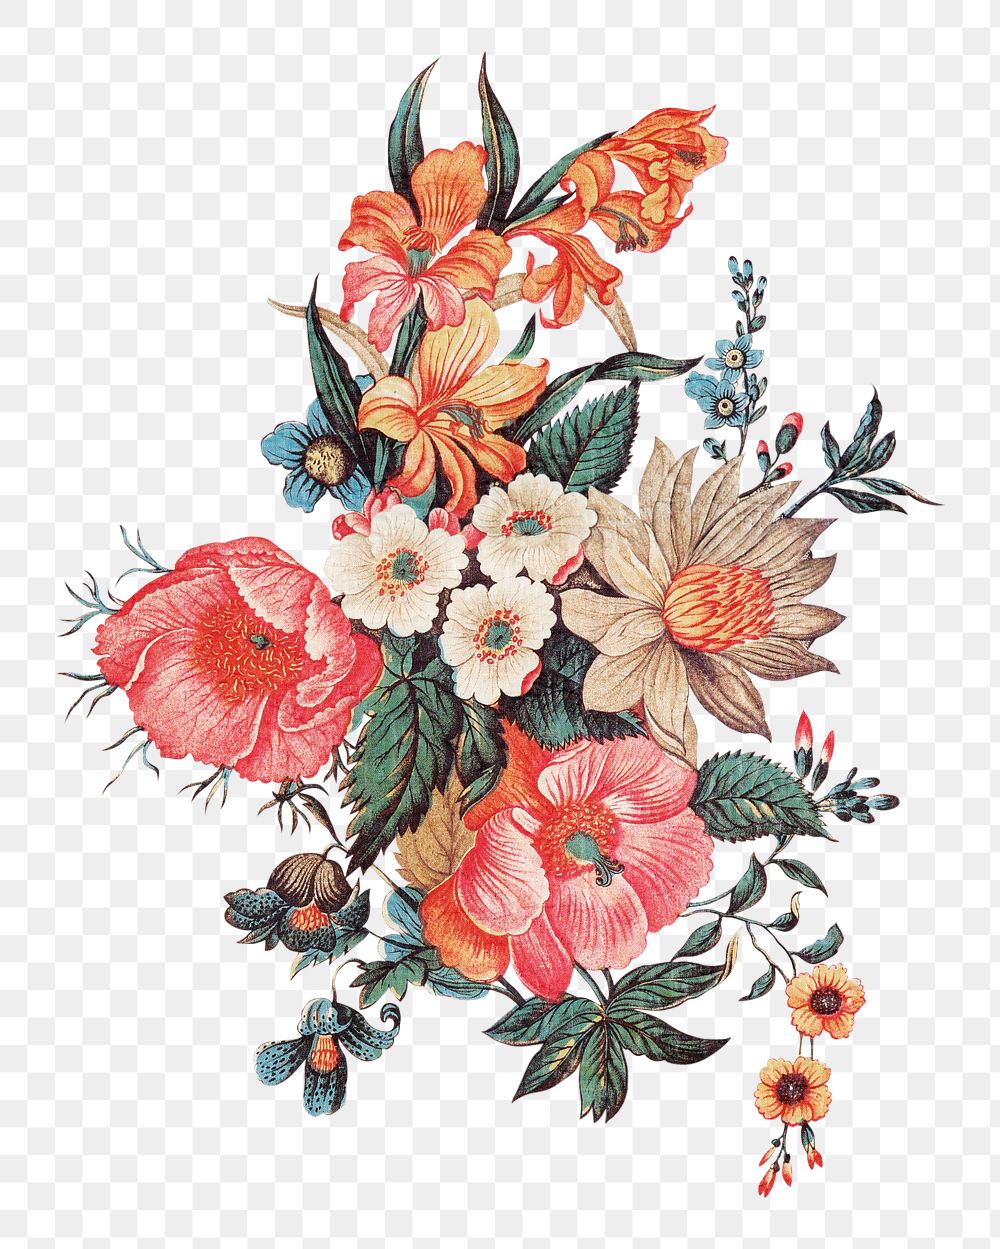 PNG Vintage flower illustration transparent background. Remixed by rawpixel.